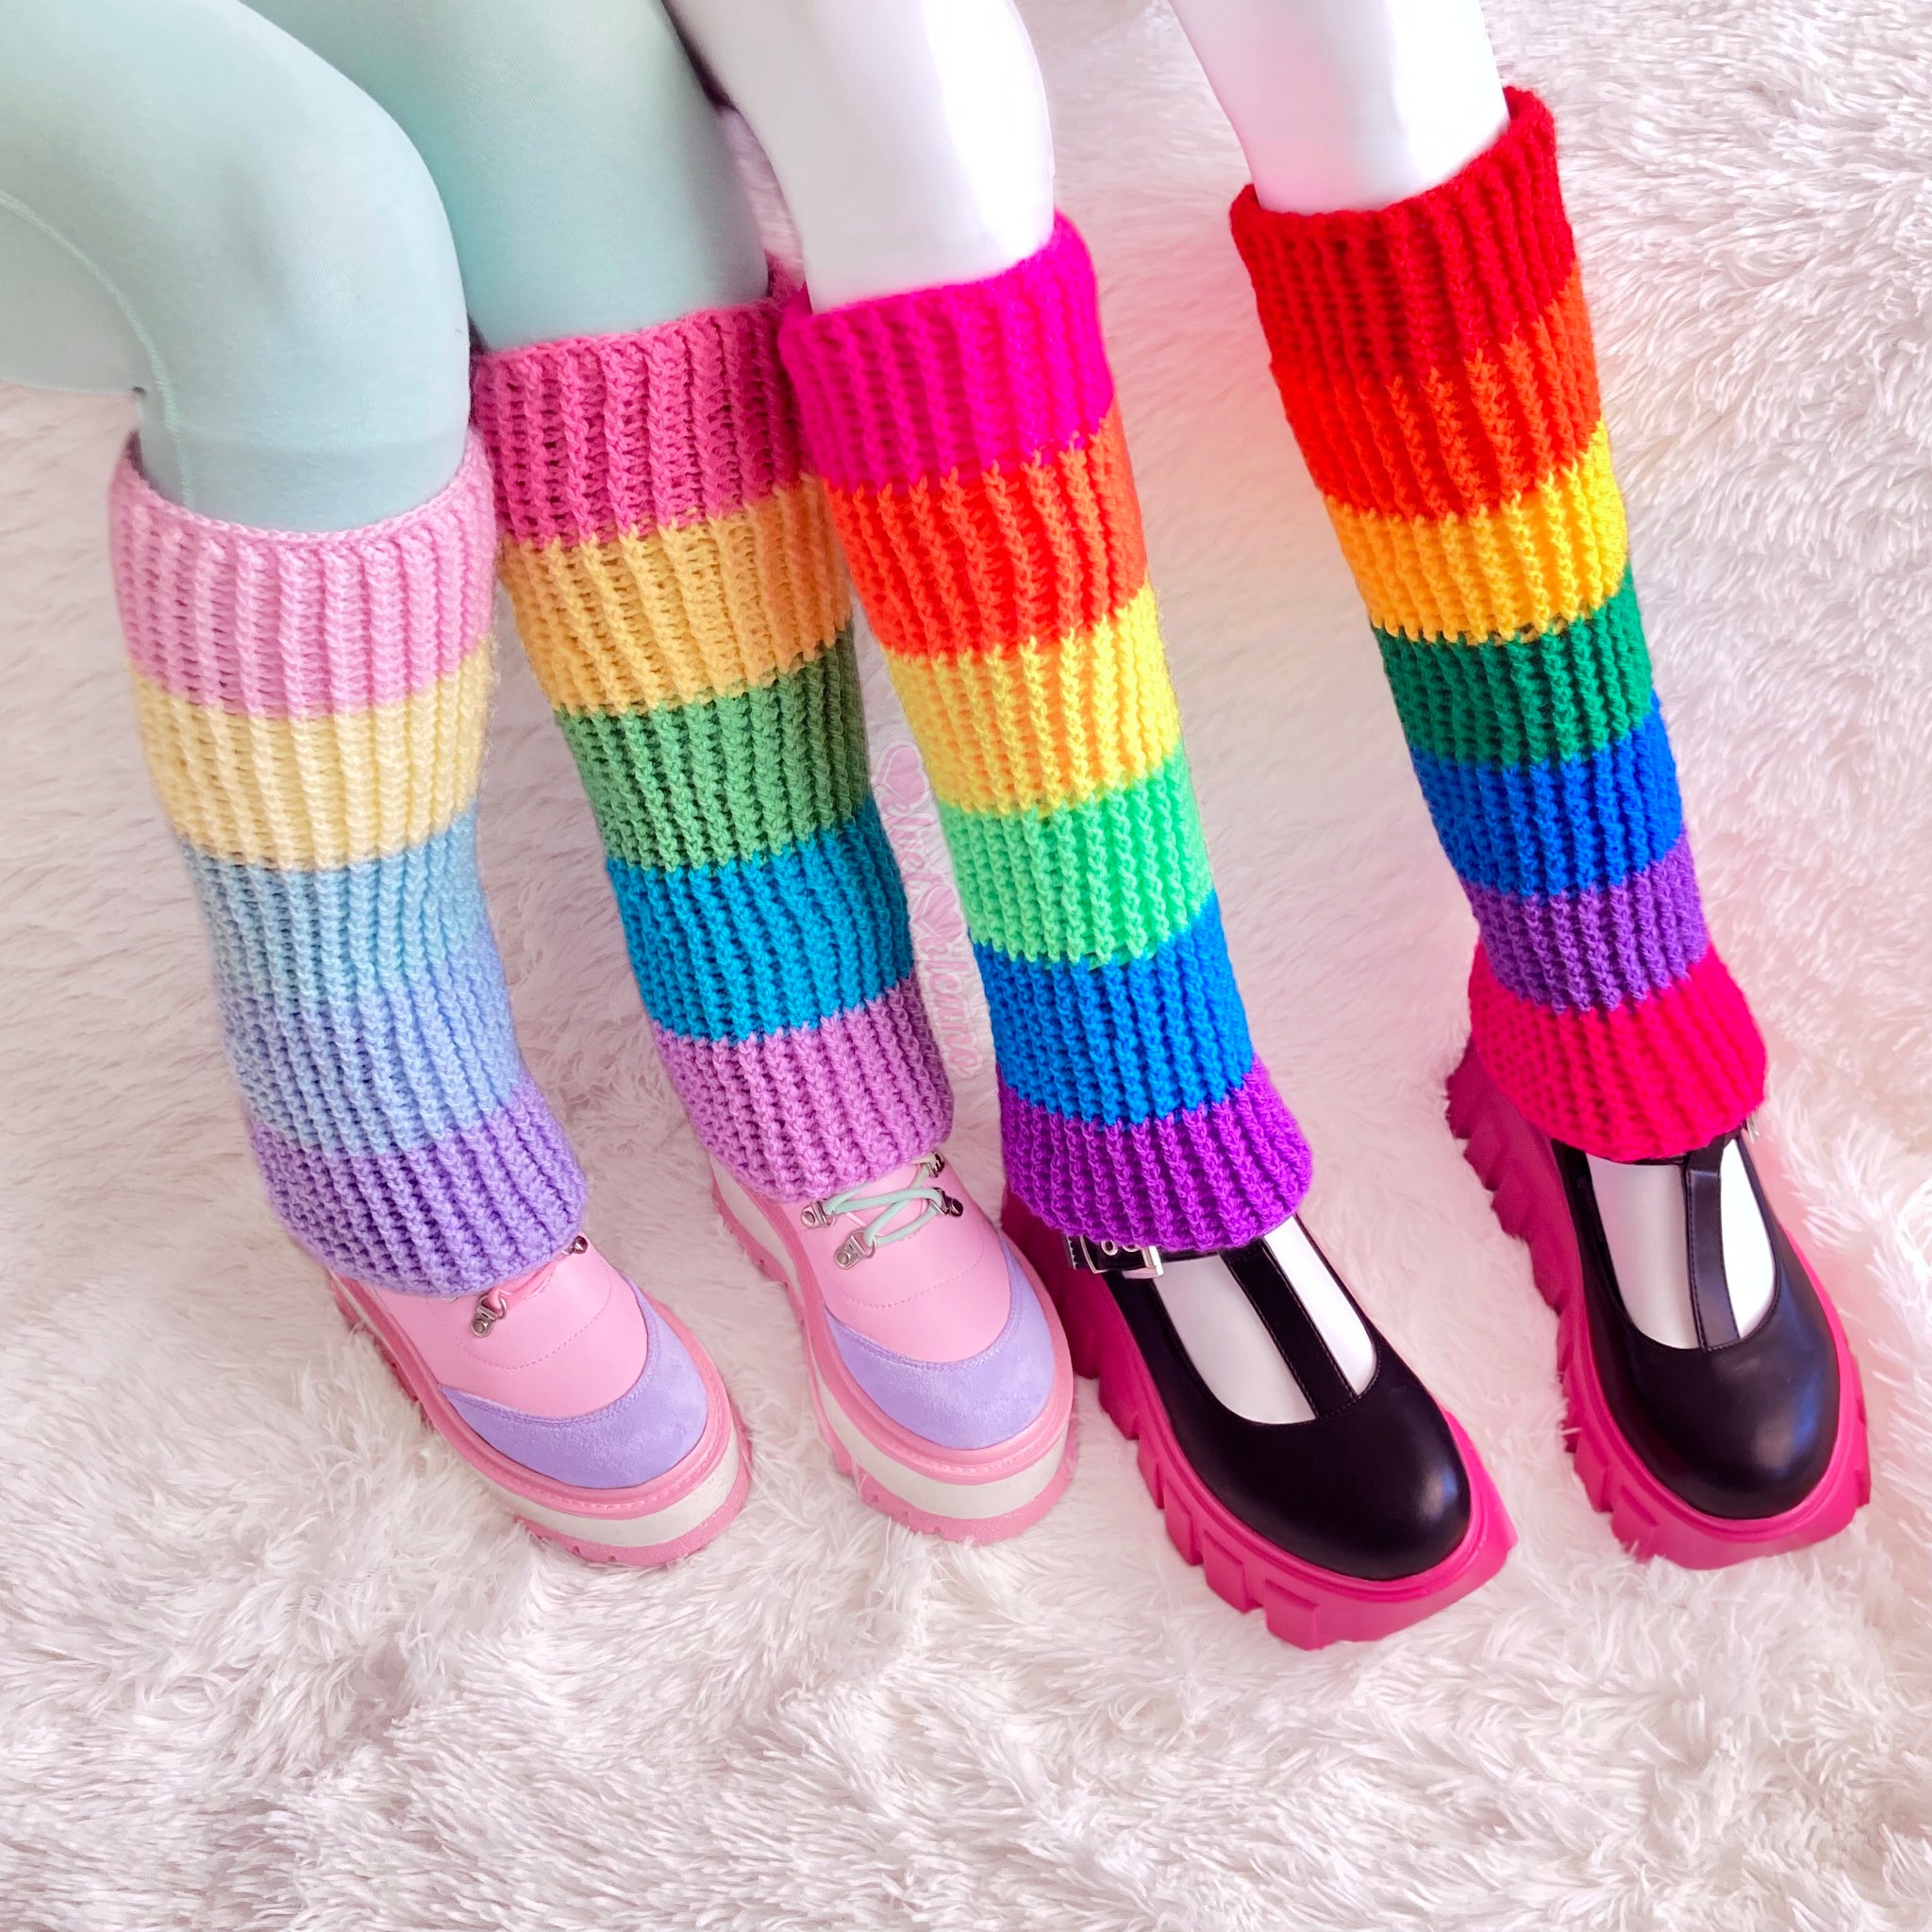 Bright Rainbow Striped Crochet Flared Leg Warmers - LGBTQ Pride by